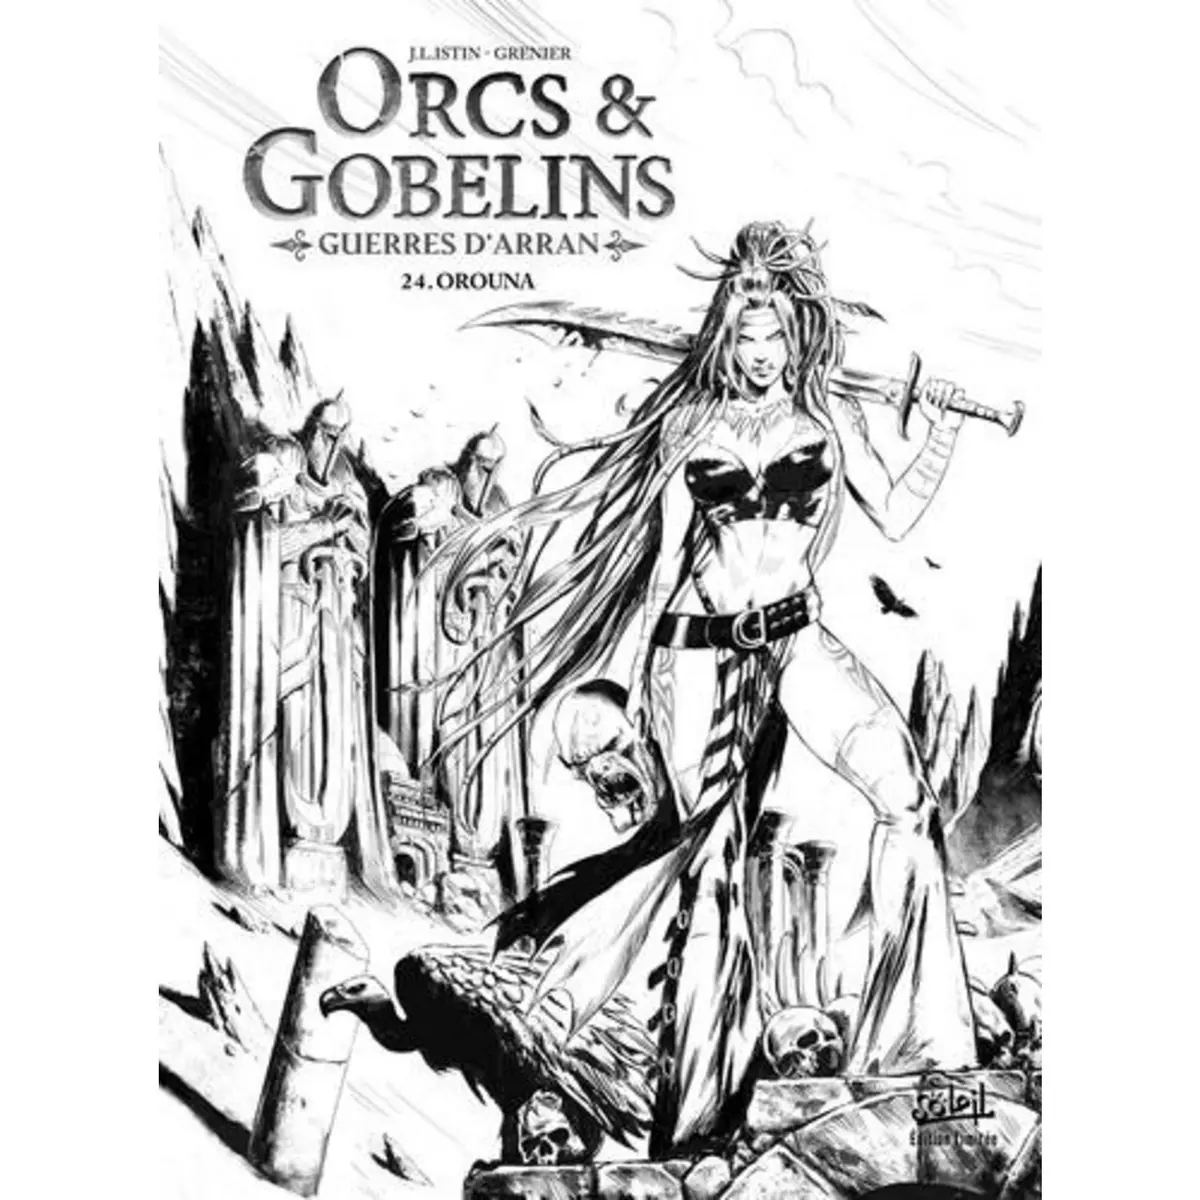  TERRES D'ARRAN : ORCS & GOBELINS TOME 24 : OROUNA. EDITION SPECIALE EN NOIR & BLANC, Istin Jean-Luc